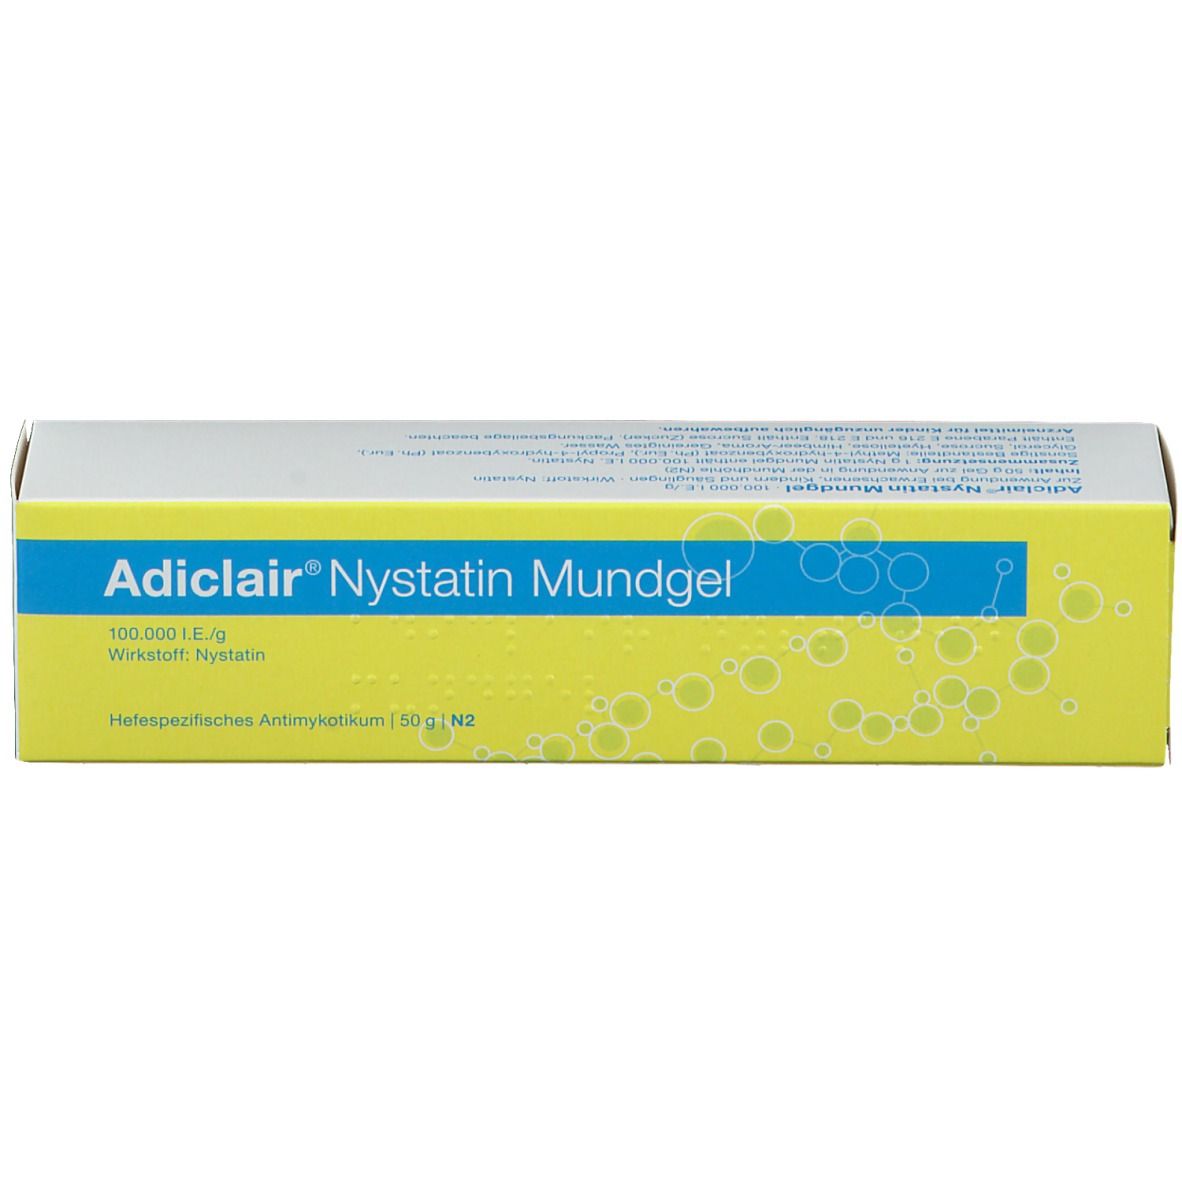 Adiclair® Mundgel